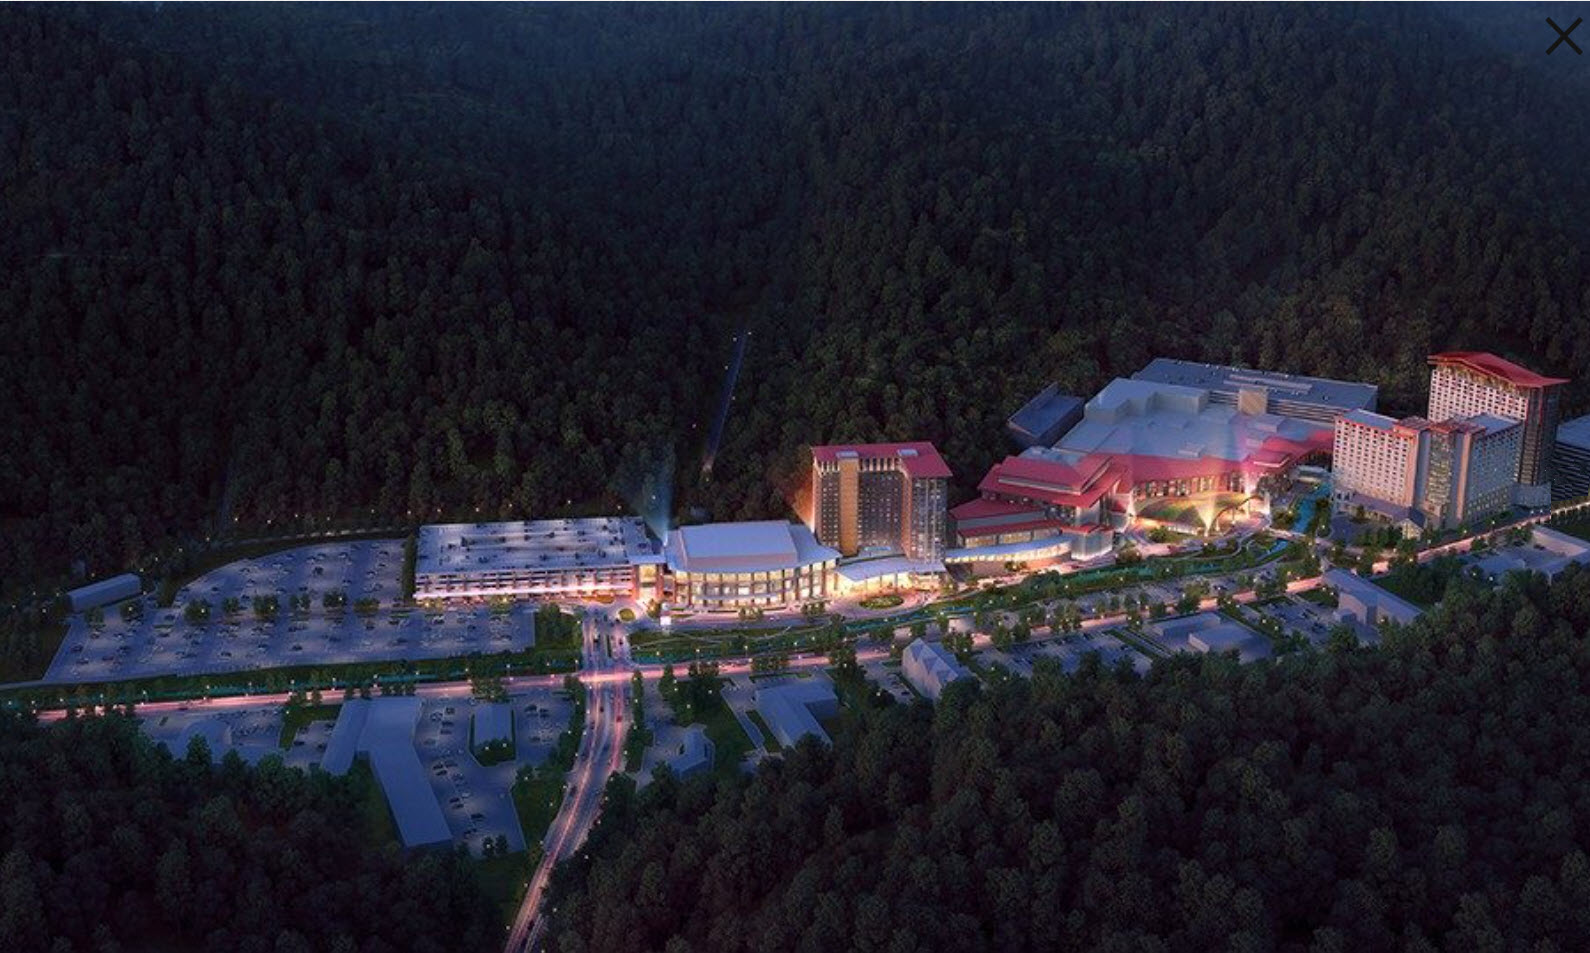 Harrah’s Cherokee Casino Resort and The Cherokee Convention Center